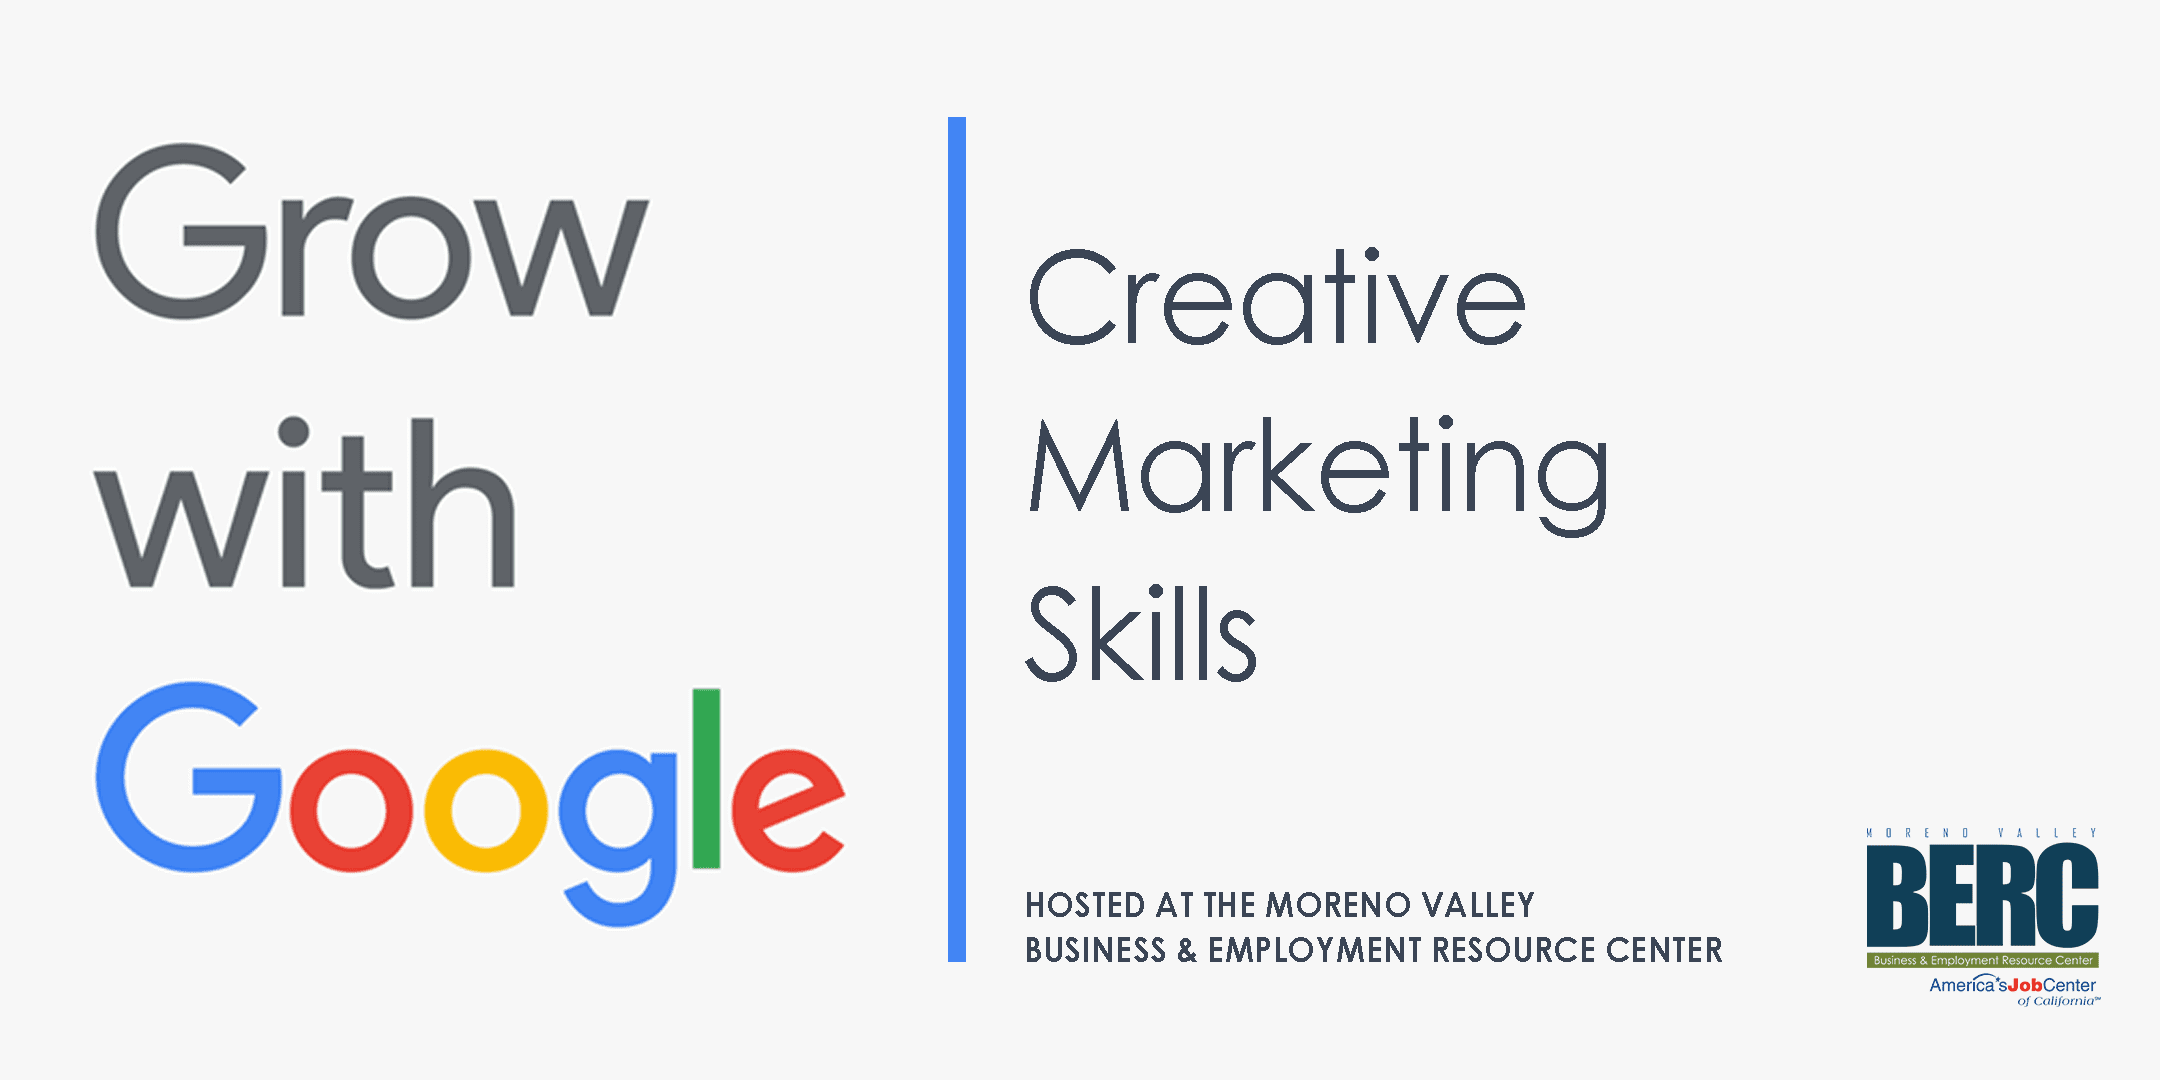 Grow with Google: Creative Marketing Skills